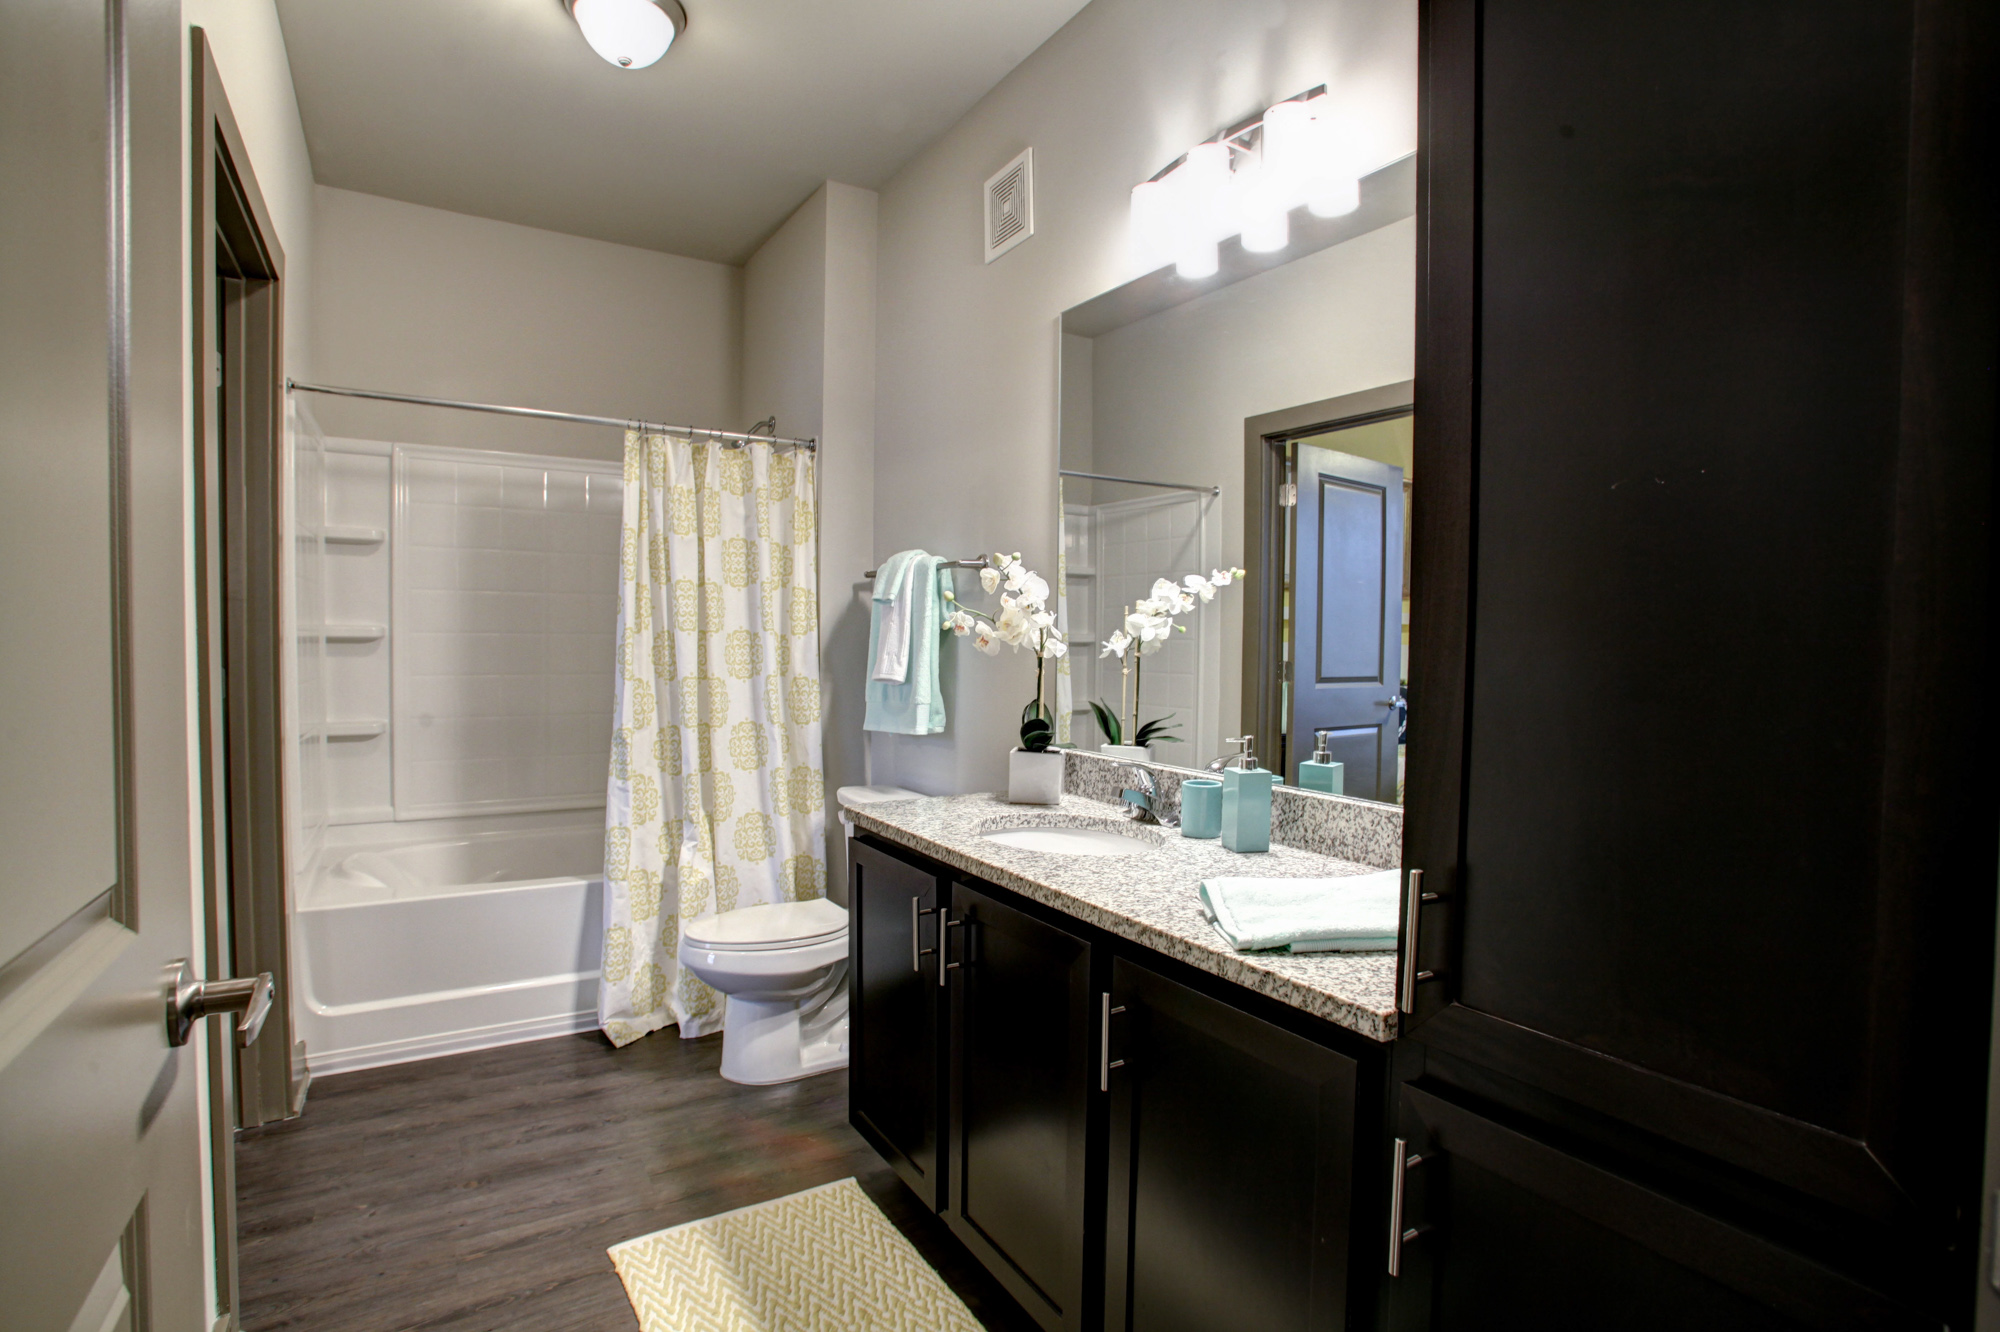 Hardwood floors meet a large bathroom with ample storage at Park 9 apartments in Woodstock, GA.